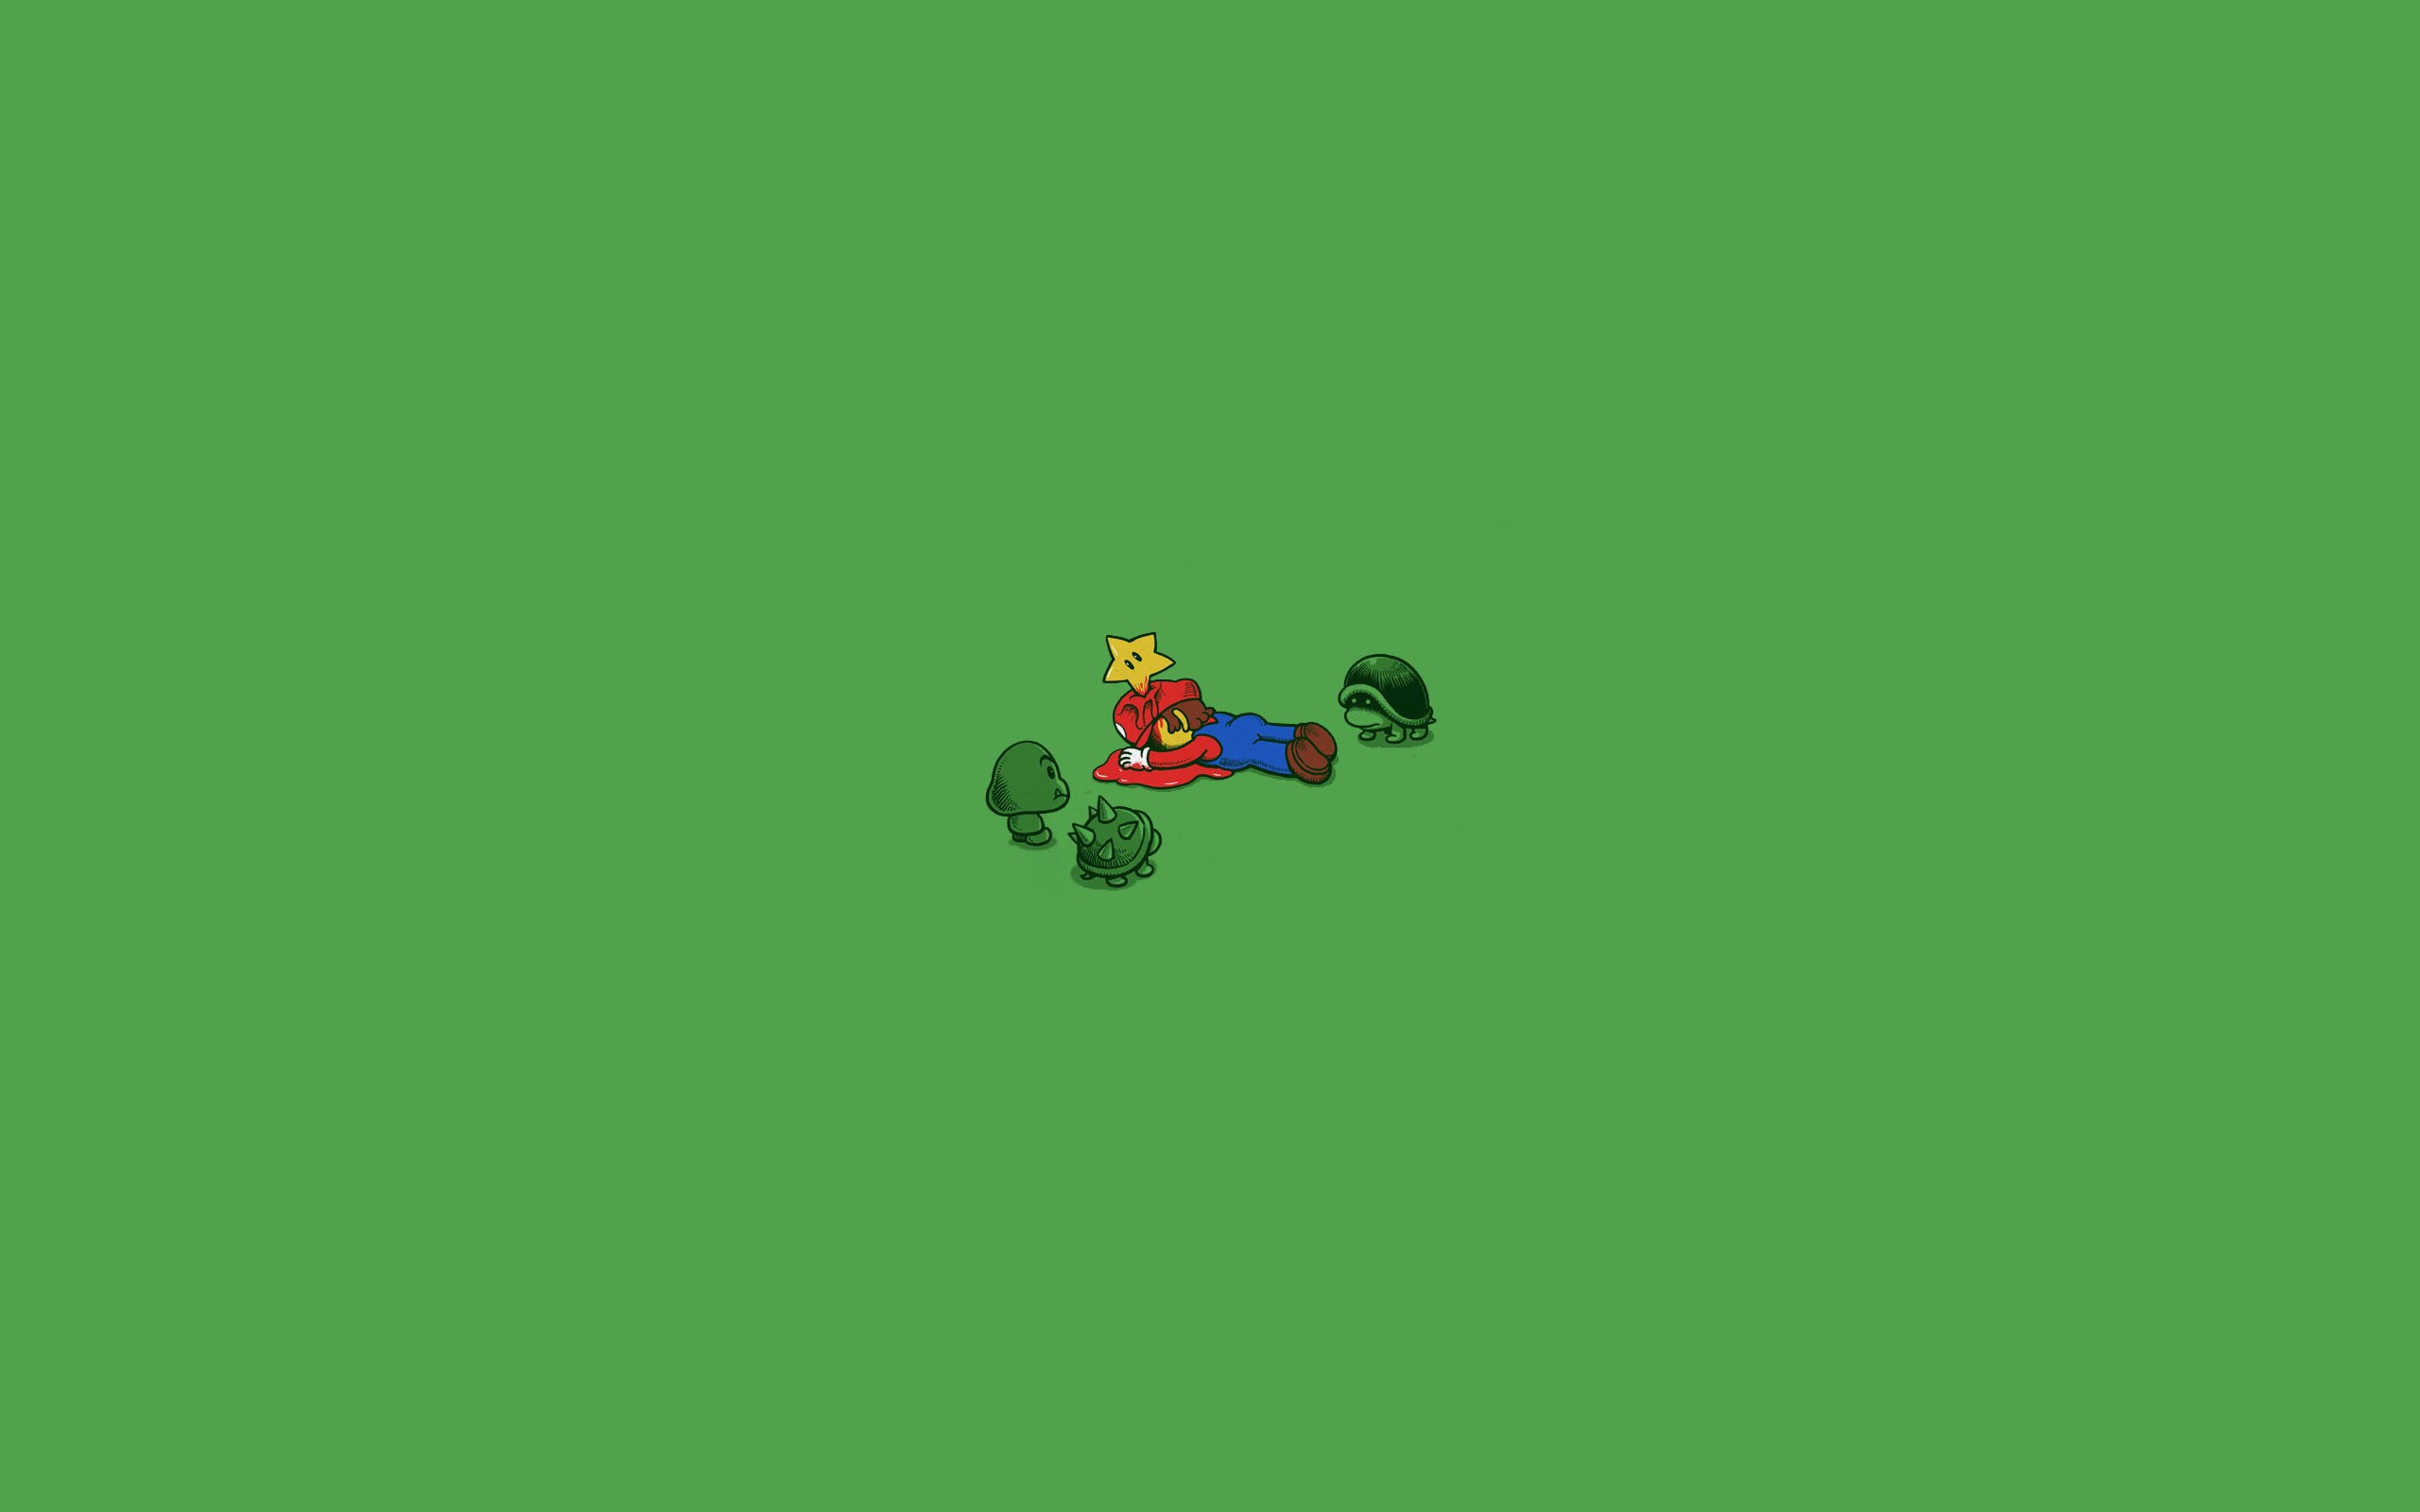 General 2560x1600 Super Mario minimalism humor blood green background simple background video games video game art dark humor